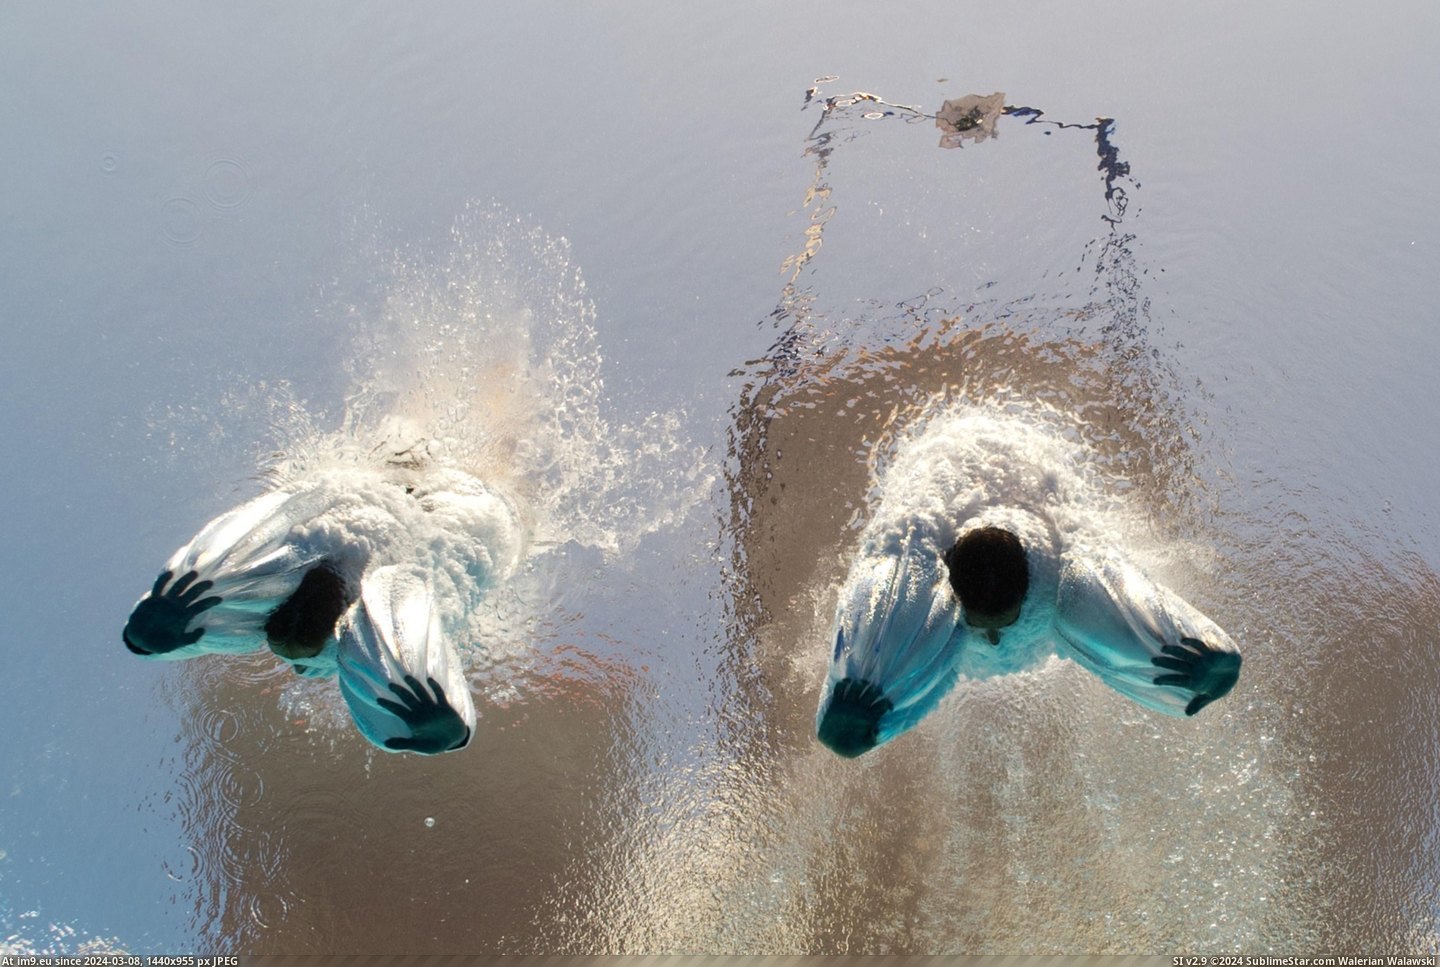  #Splash  [Pics] After the splash Pic. (Obraz z album My r/PICS favs))